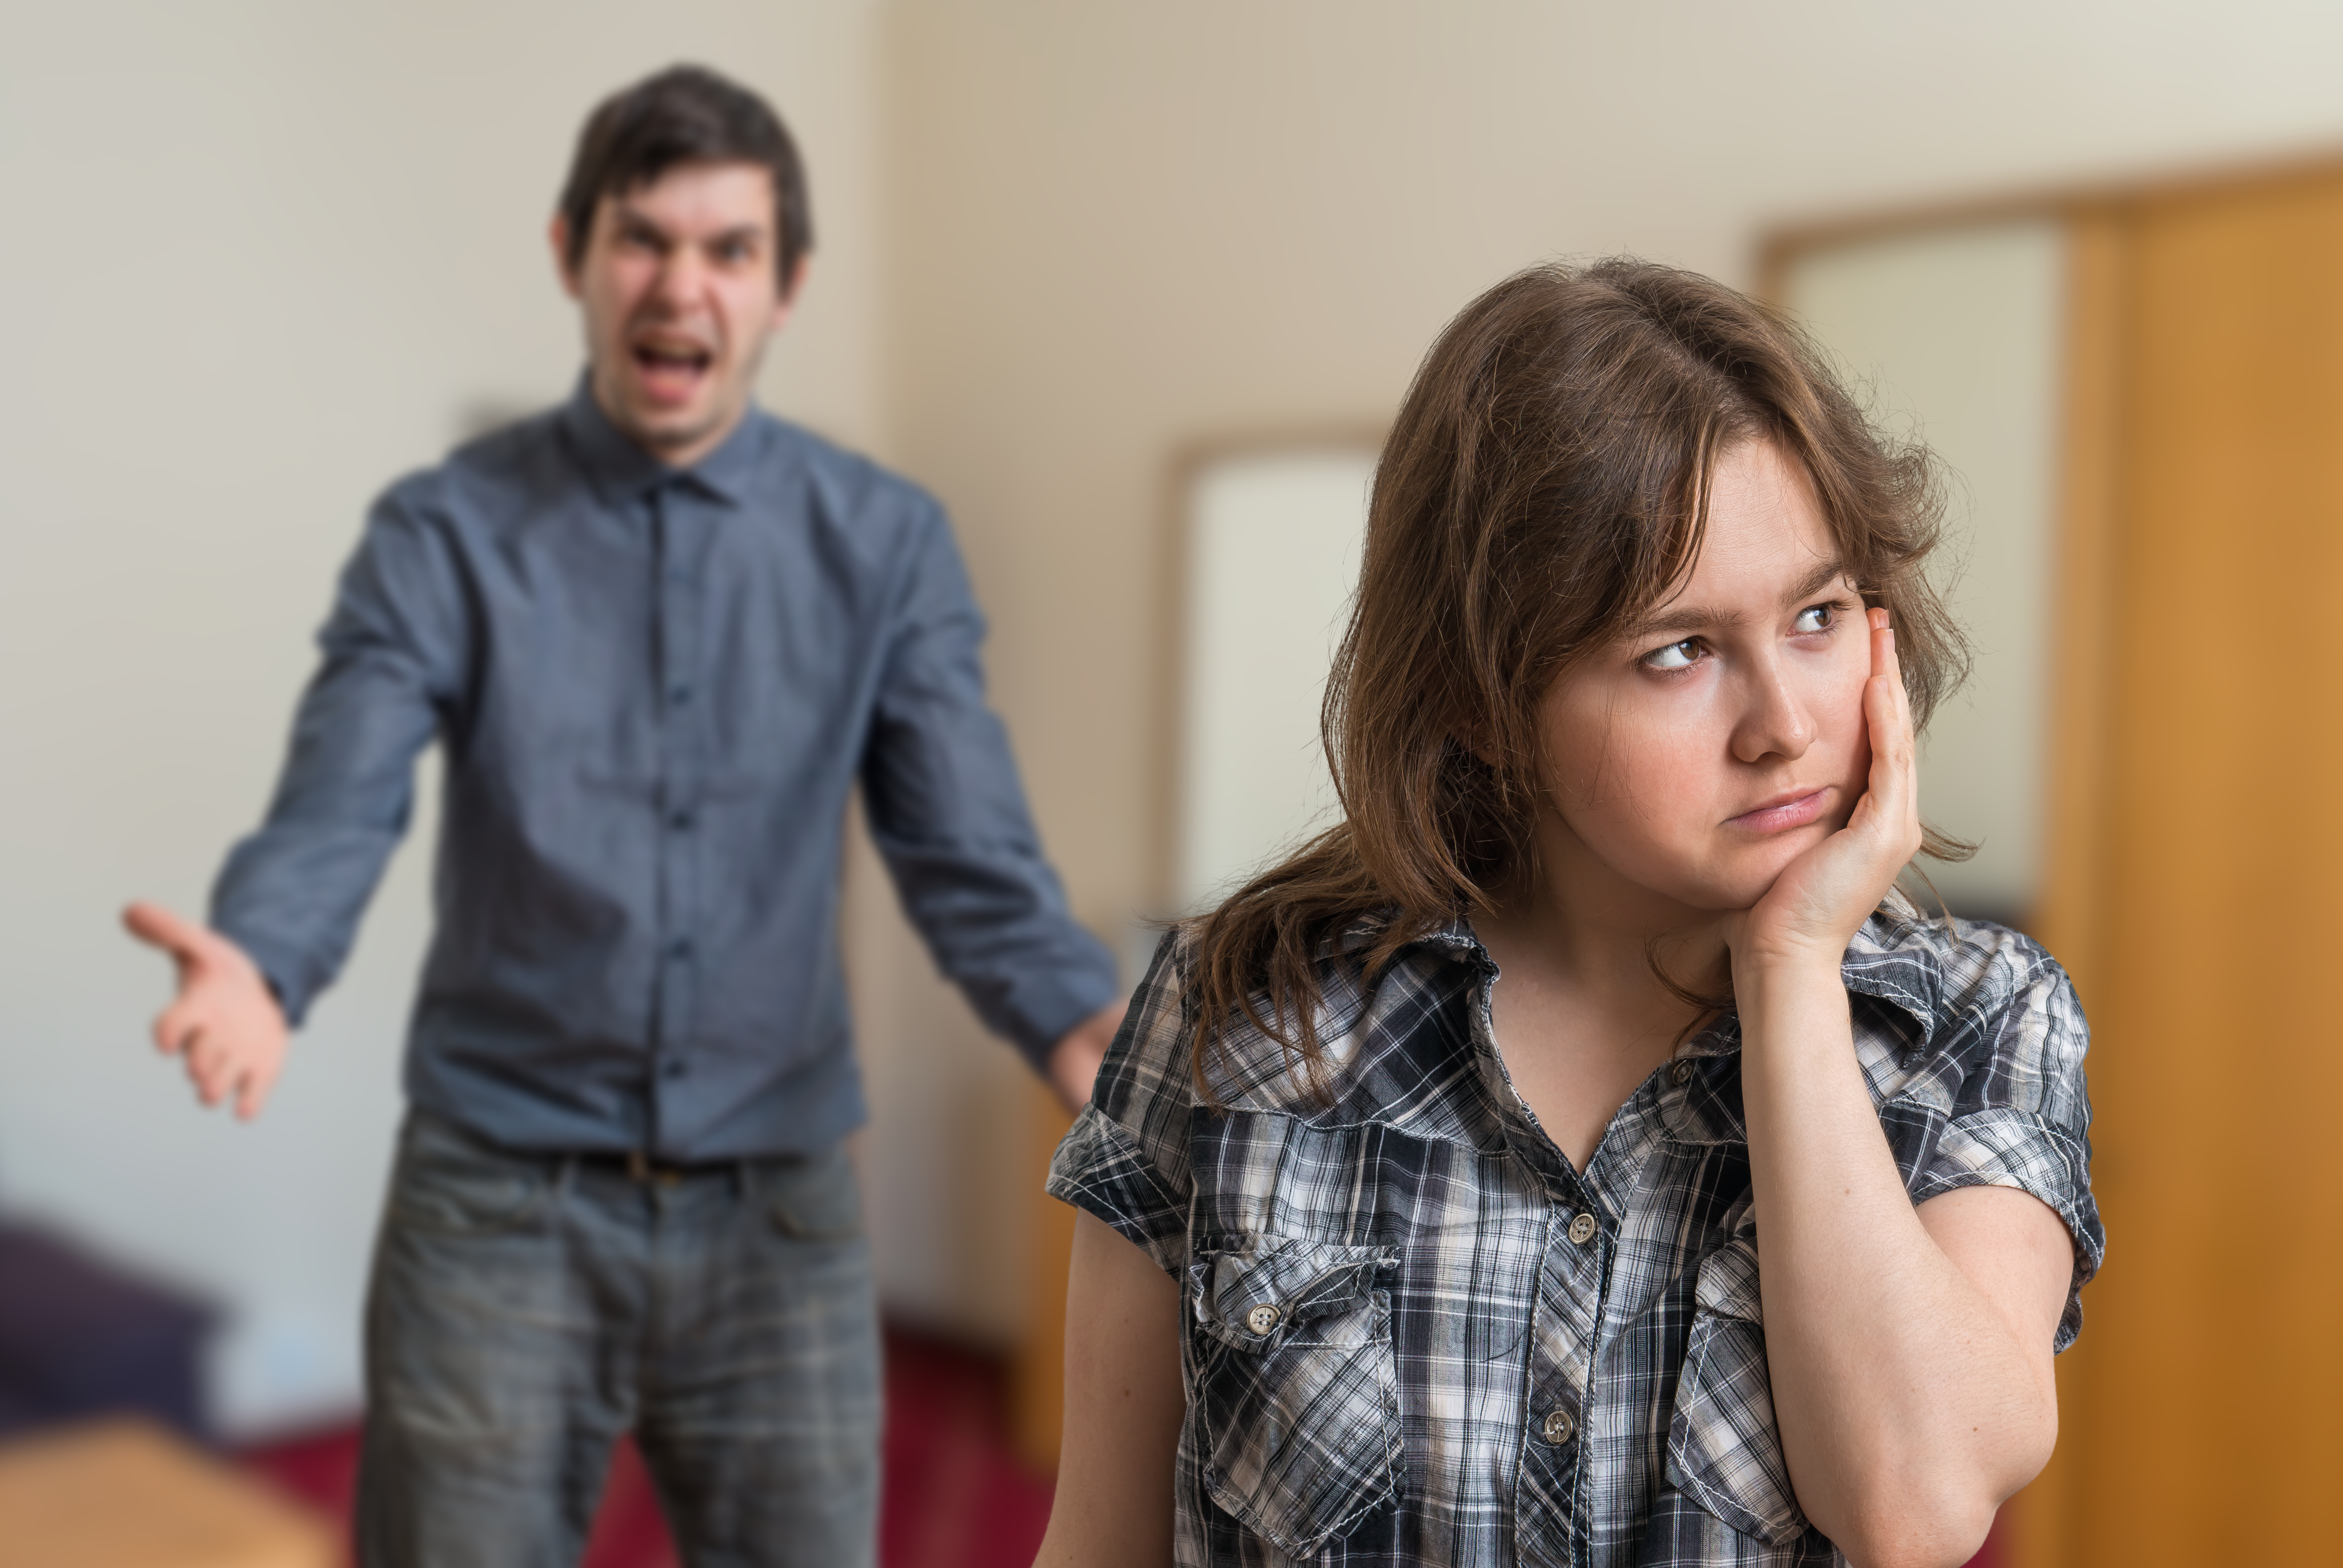 Un hombre gritando a una mujer | Foto: Shutterstock